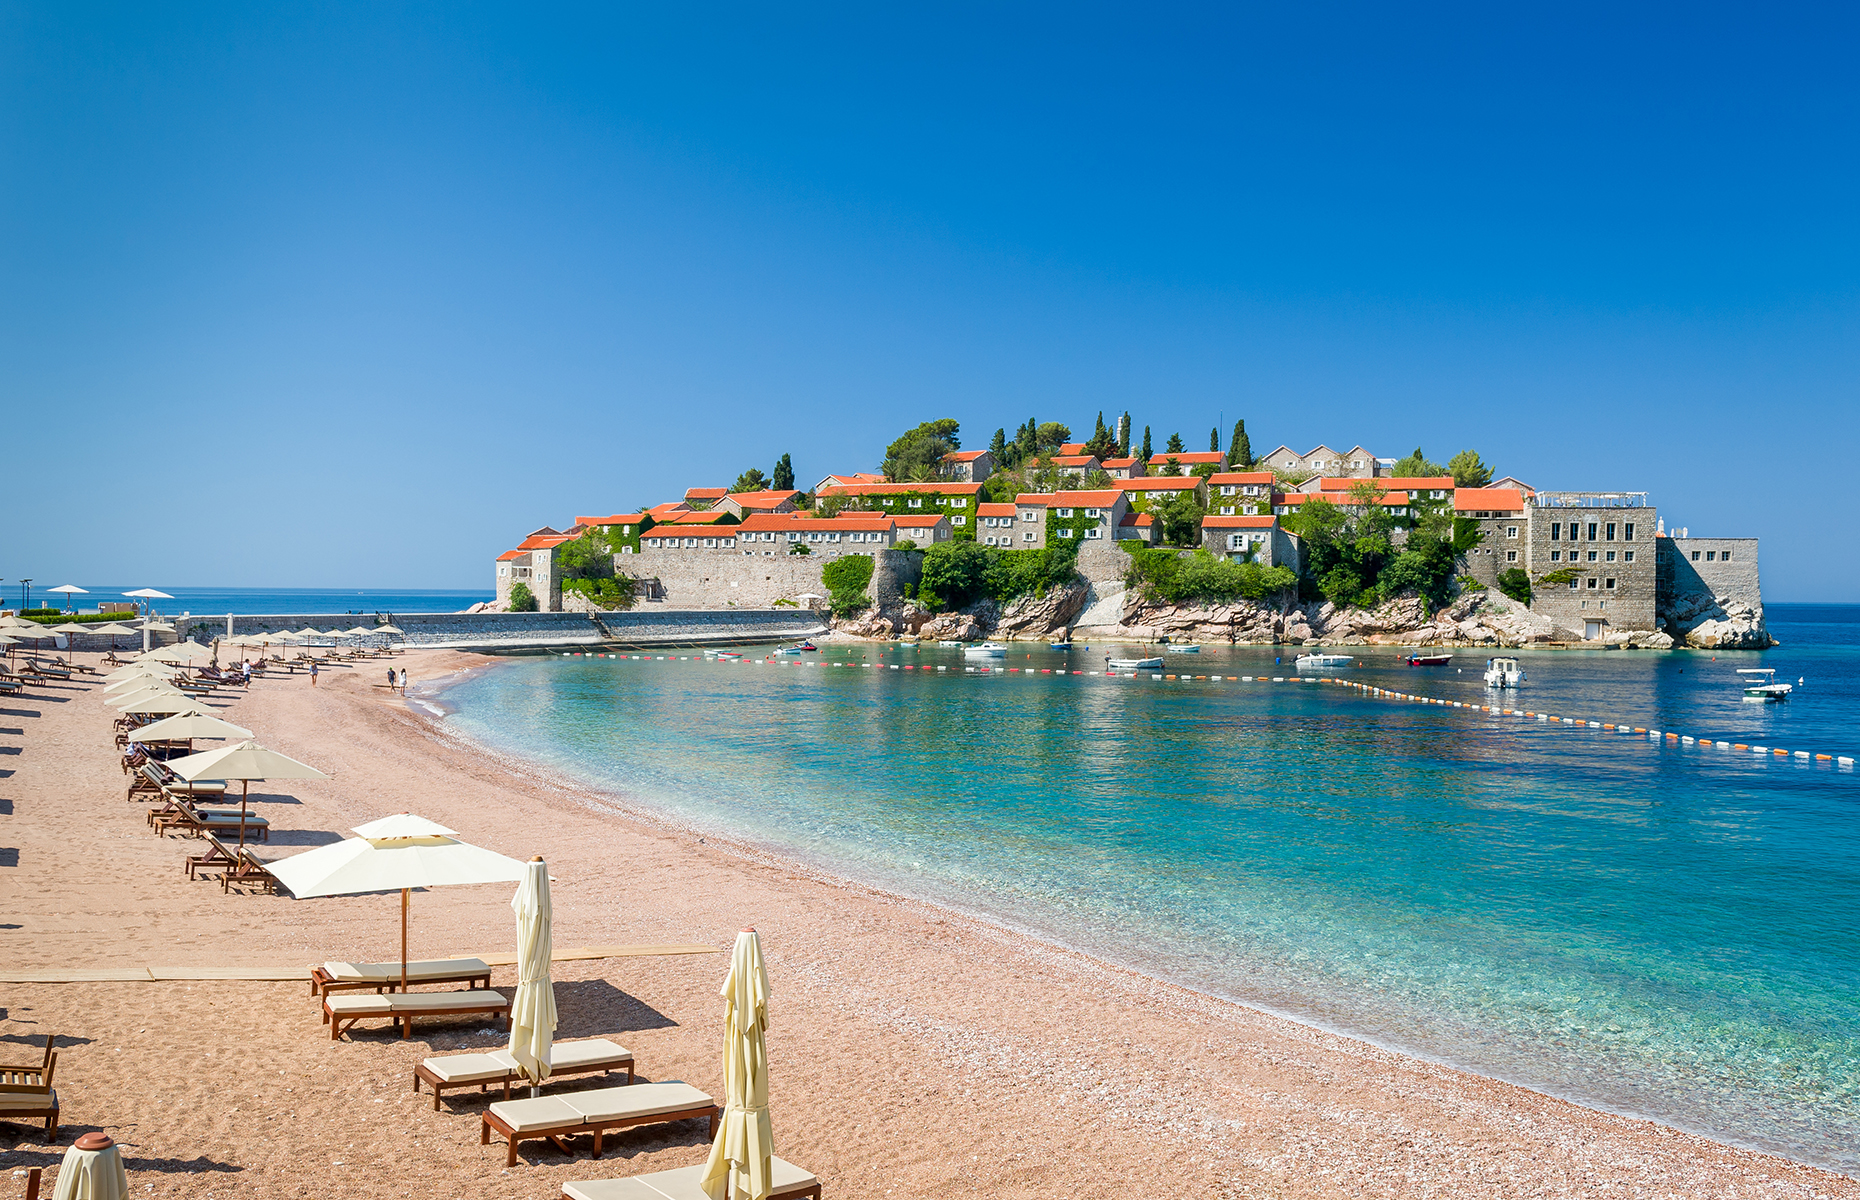 Sveti Stefan marina, Montenegro. (Image: Nikiforov Alexander/Shutterstock)